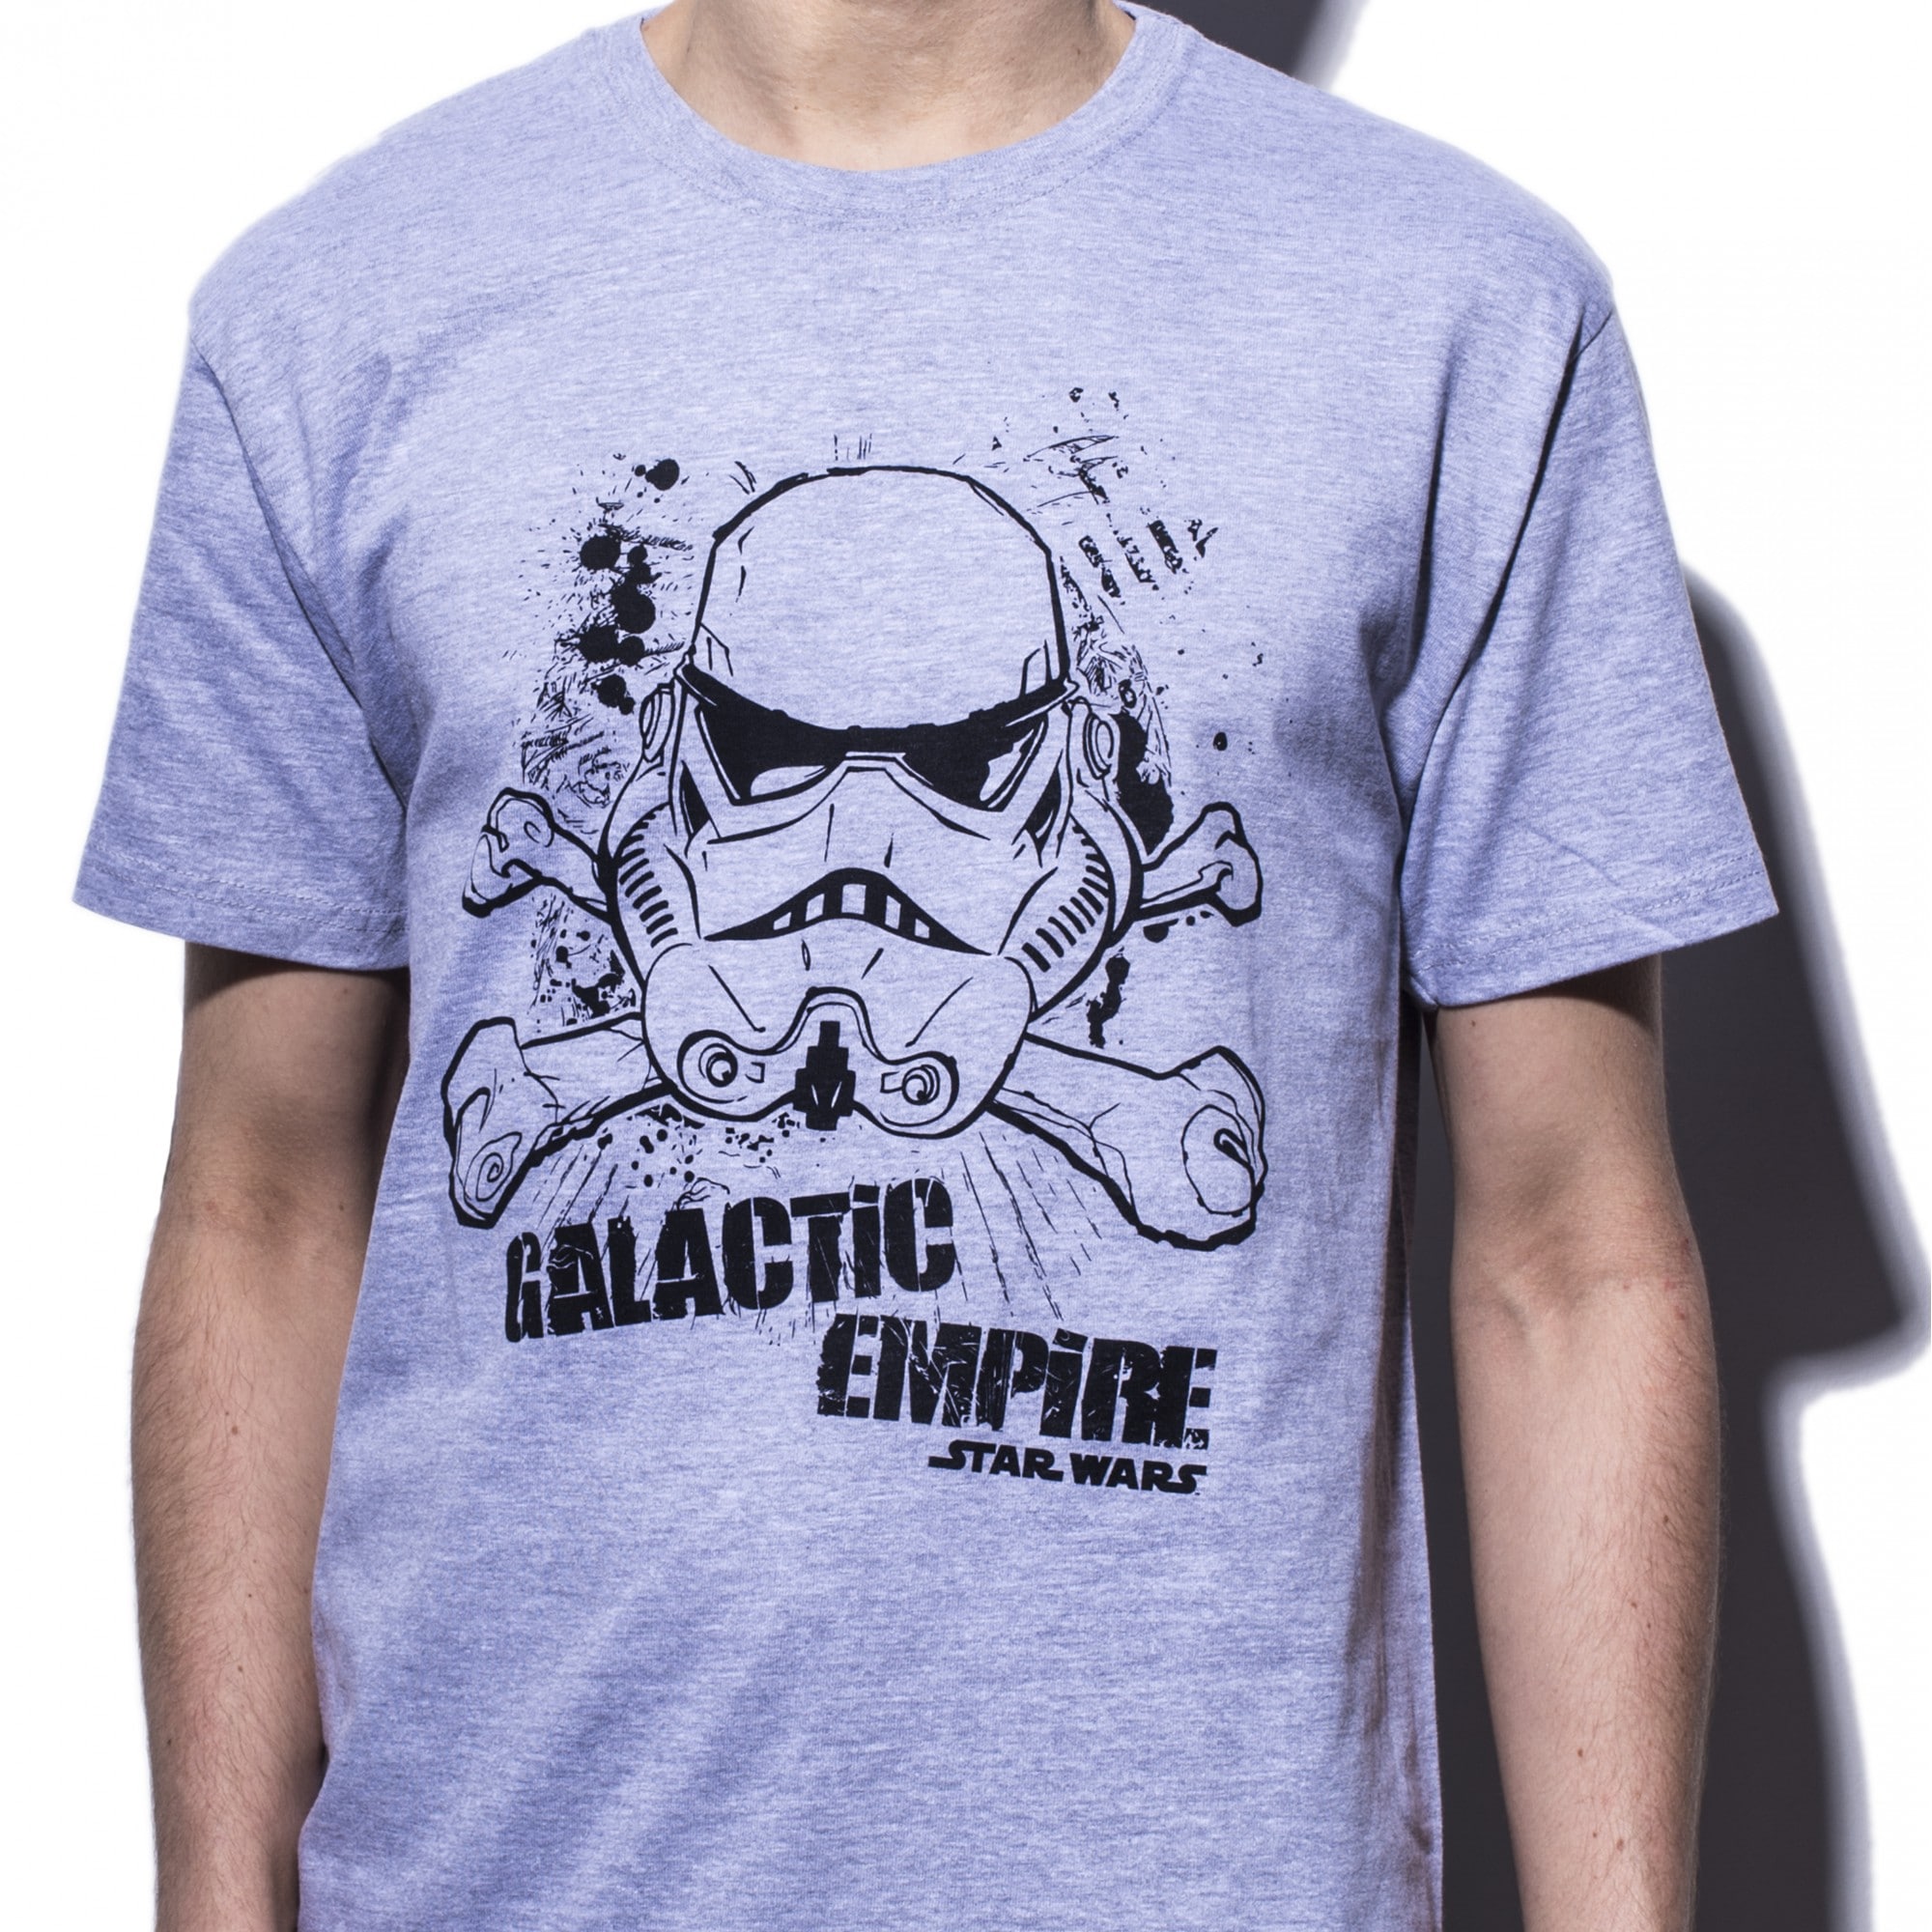 STAR WARS - Tshirt "Galactic Empire" man SS sport  - basic M Gray - 1